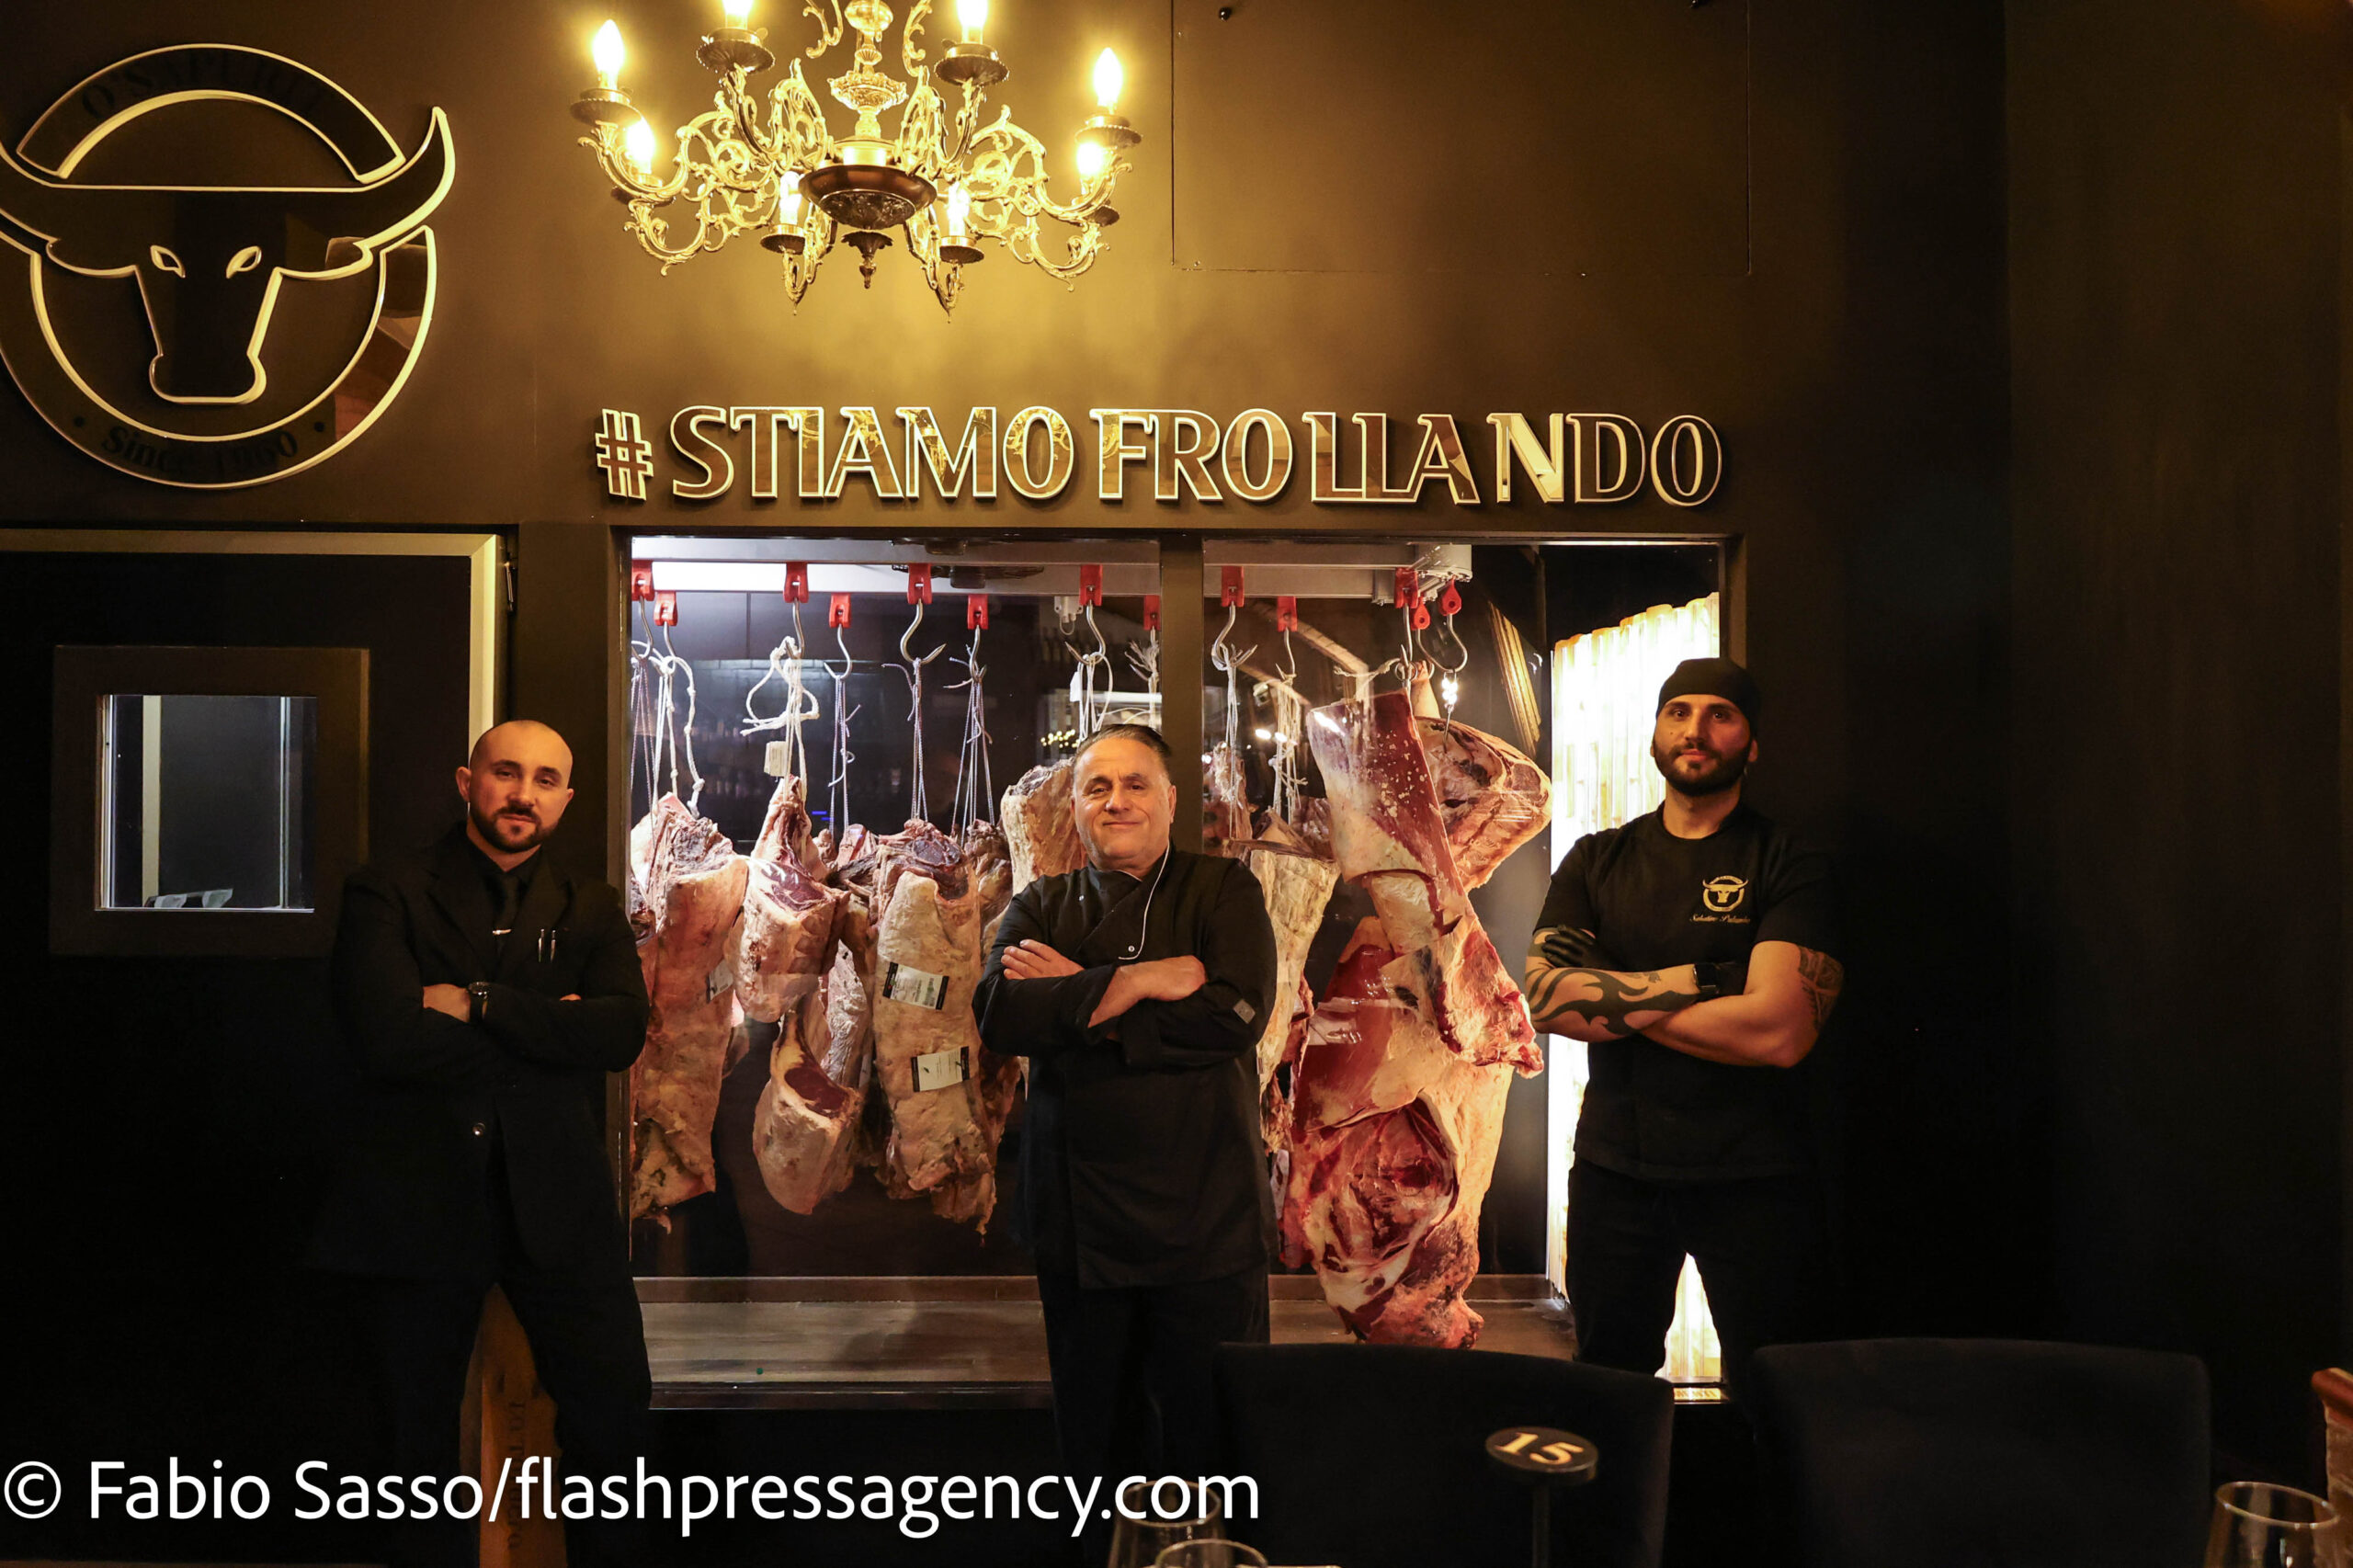  Steack House “O’ Spurt”, la nuova dimensione di mangiare carne in Campania